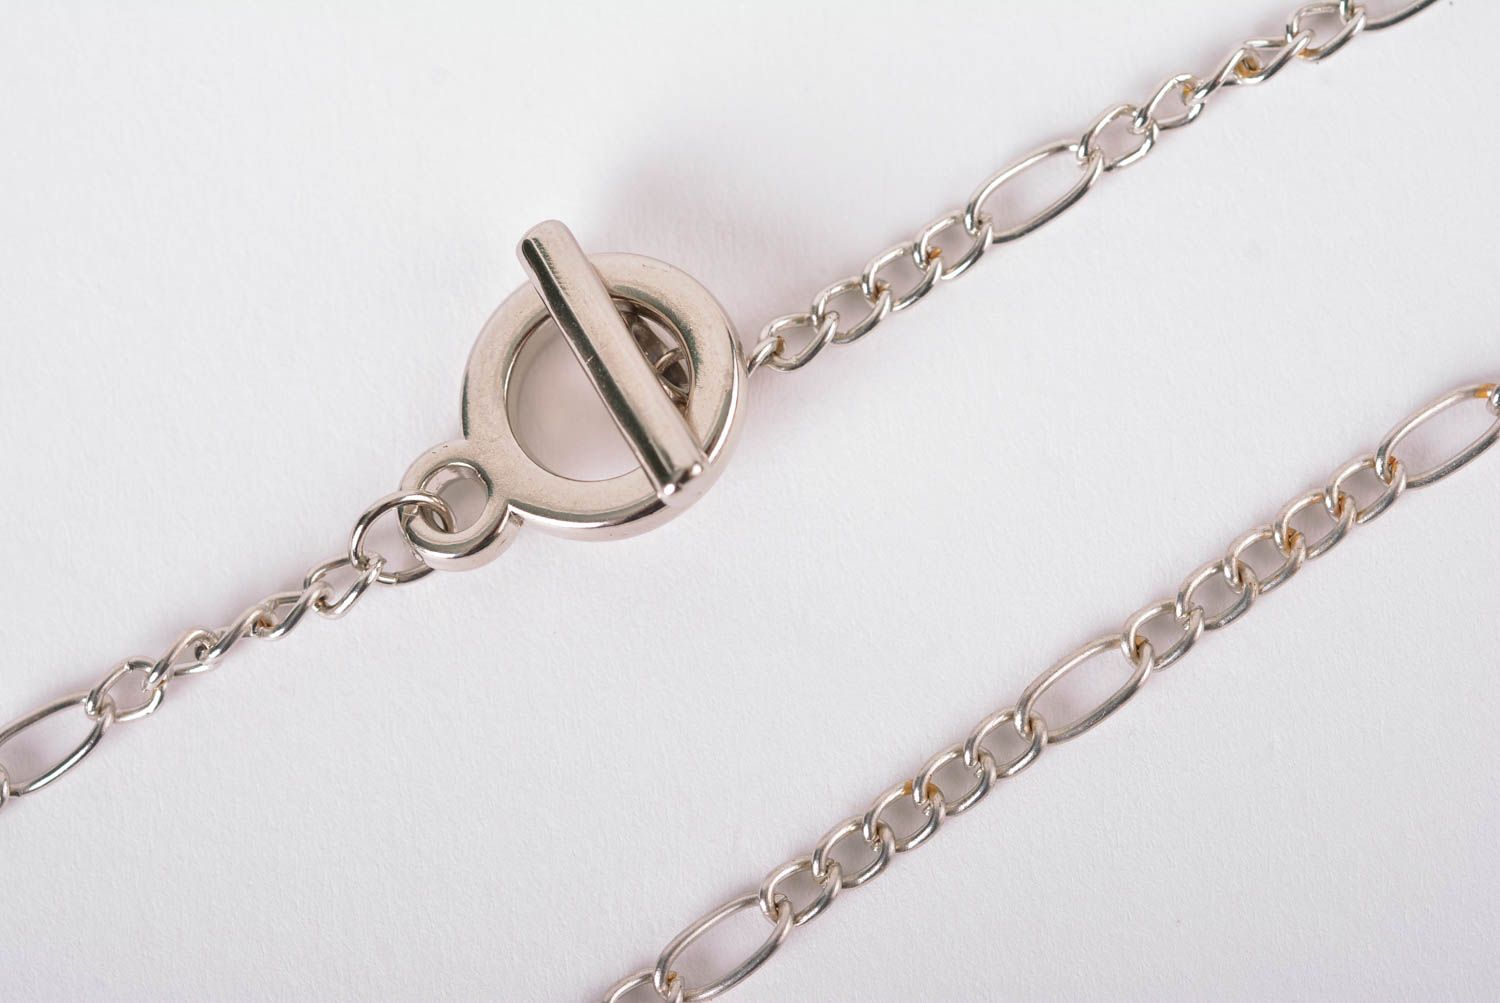 Elite handmade neck pendant metal necklace epoxy pendant fashion tips for girls photo 5